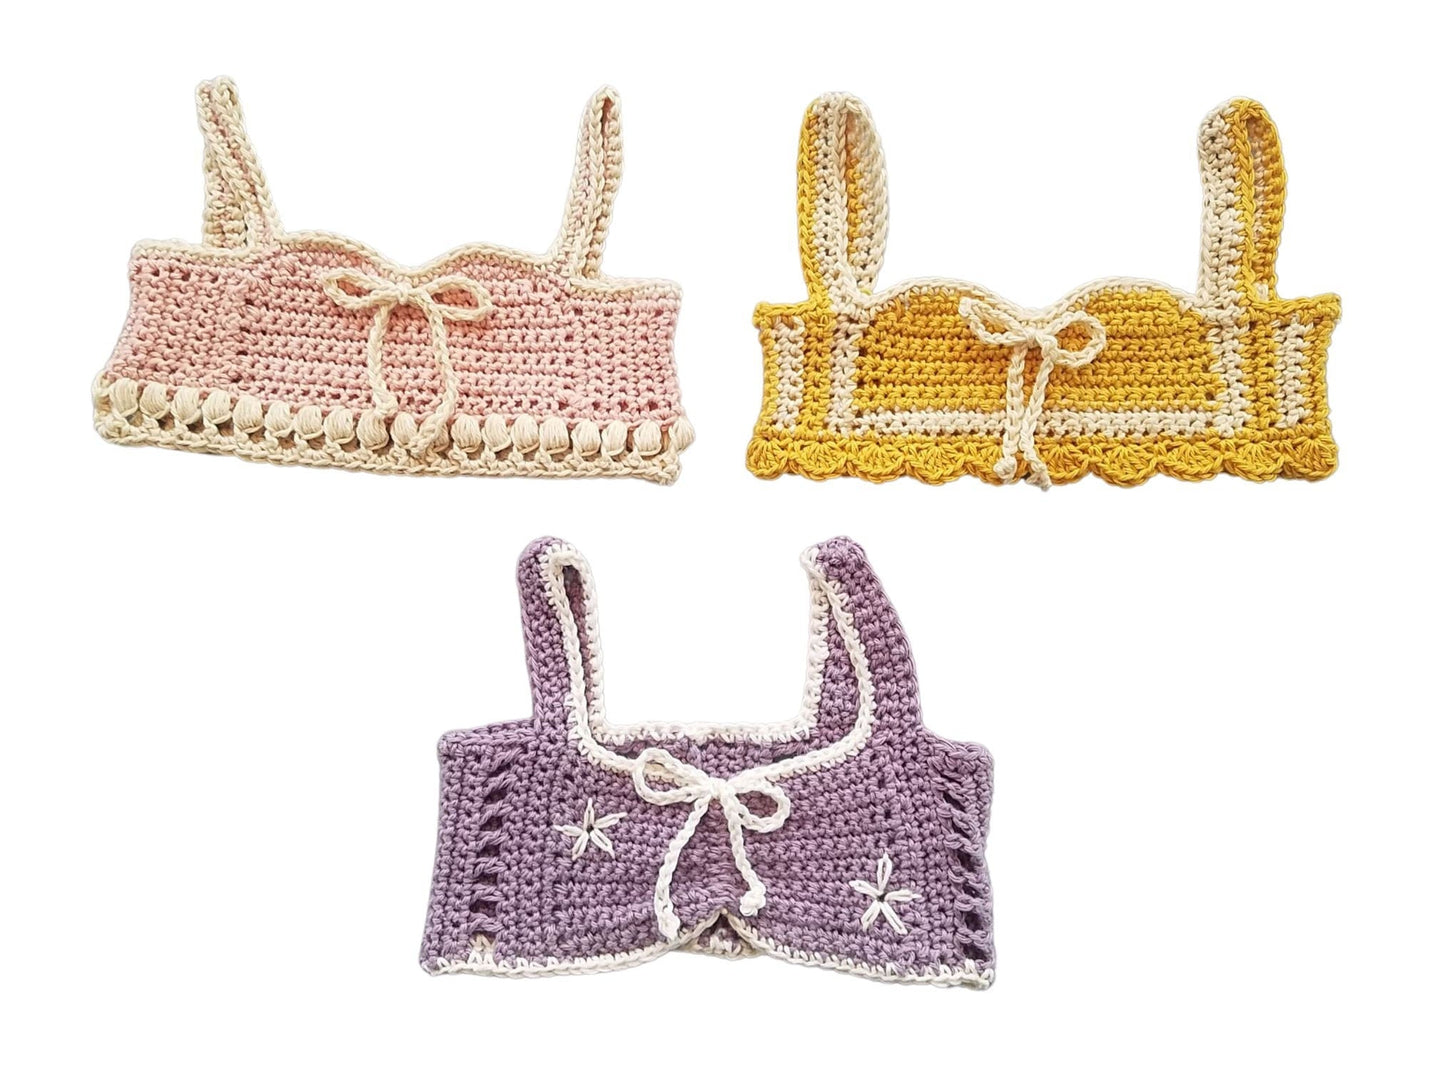 Infant / Toddler Crochet Pattern Bundle - 3 Crop Tops - Mermaidcat Designs